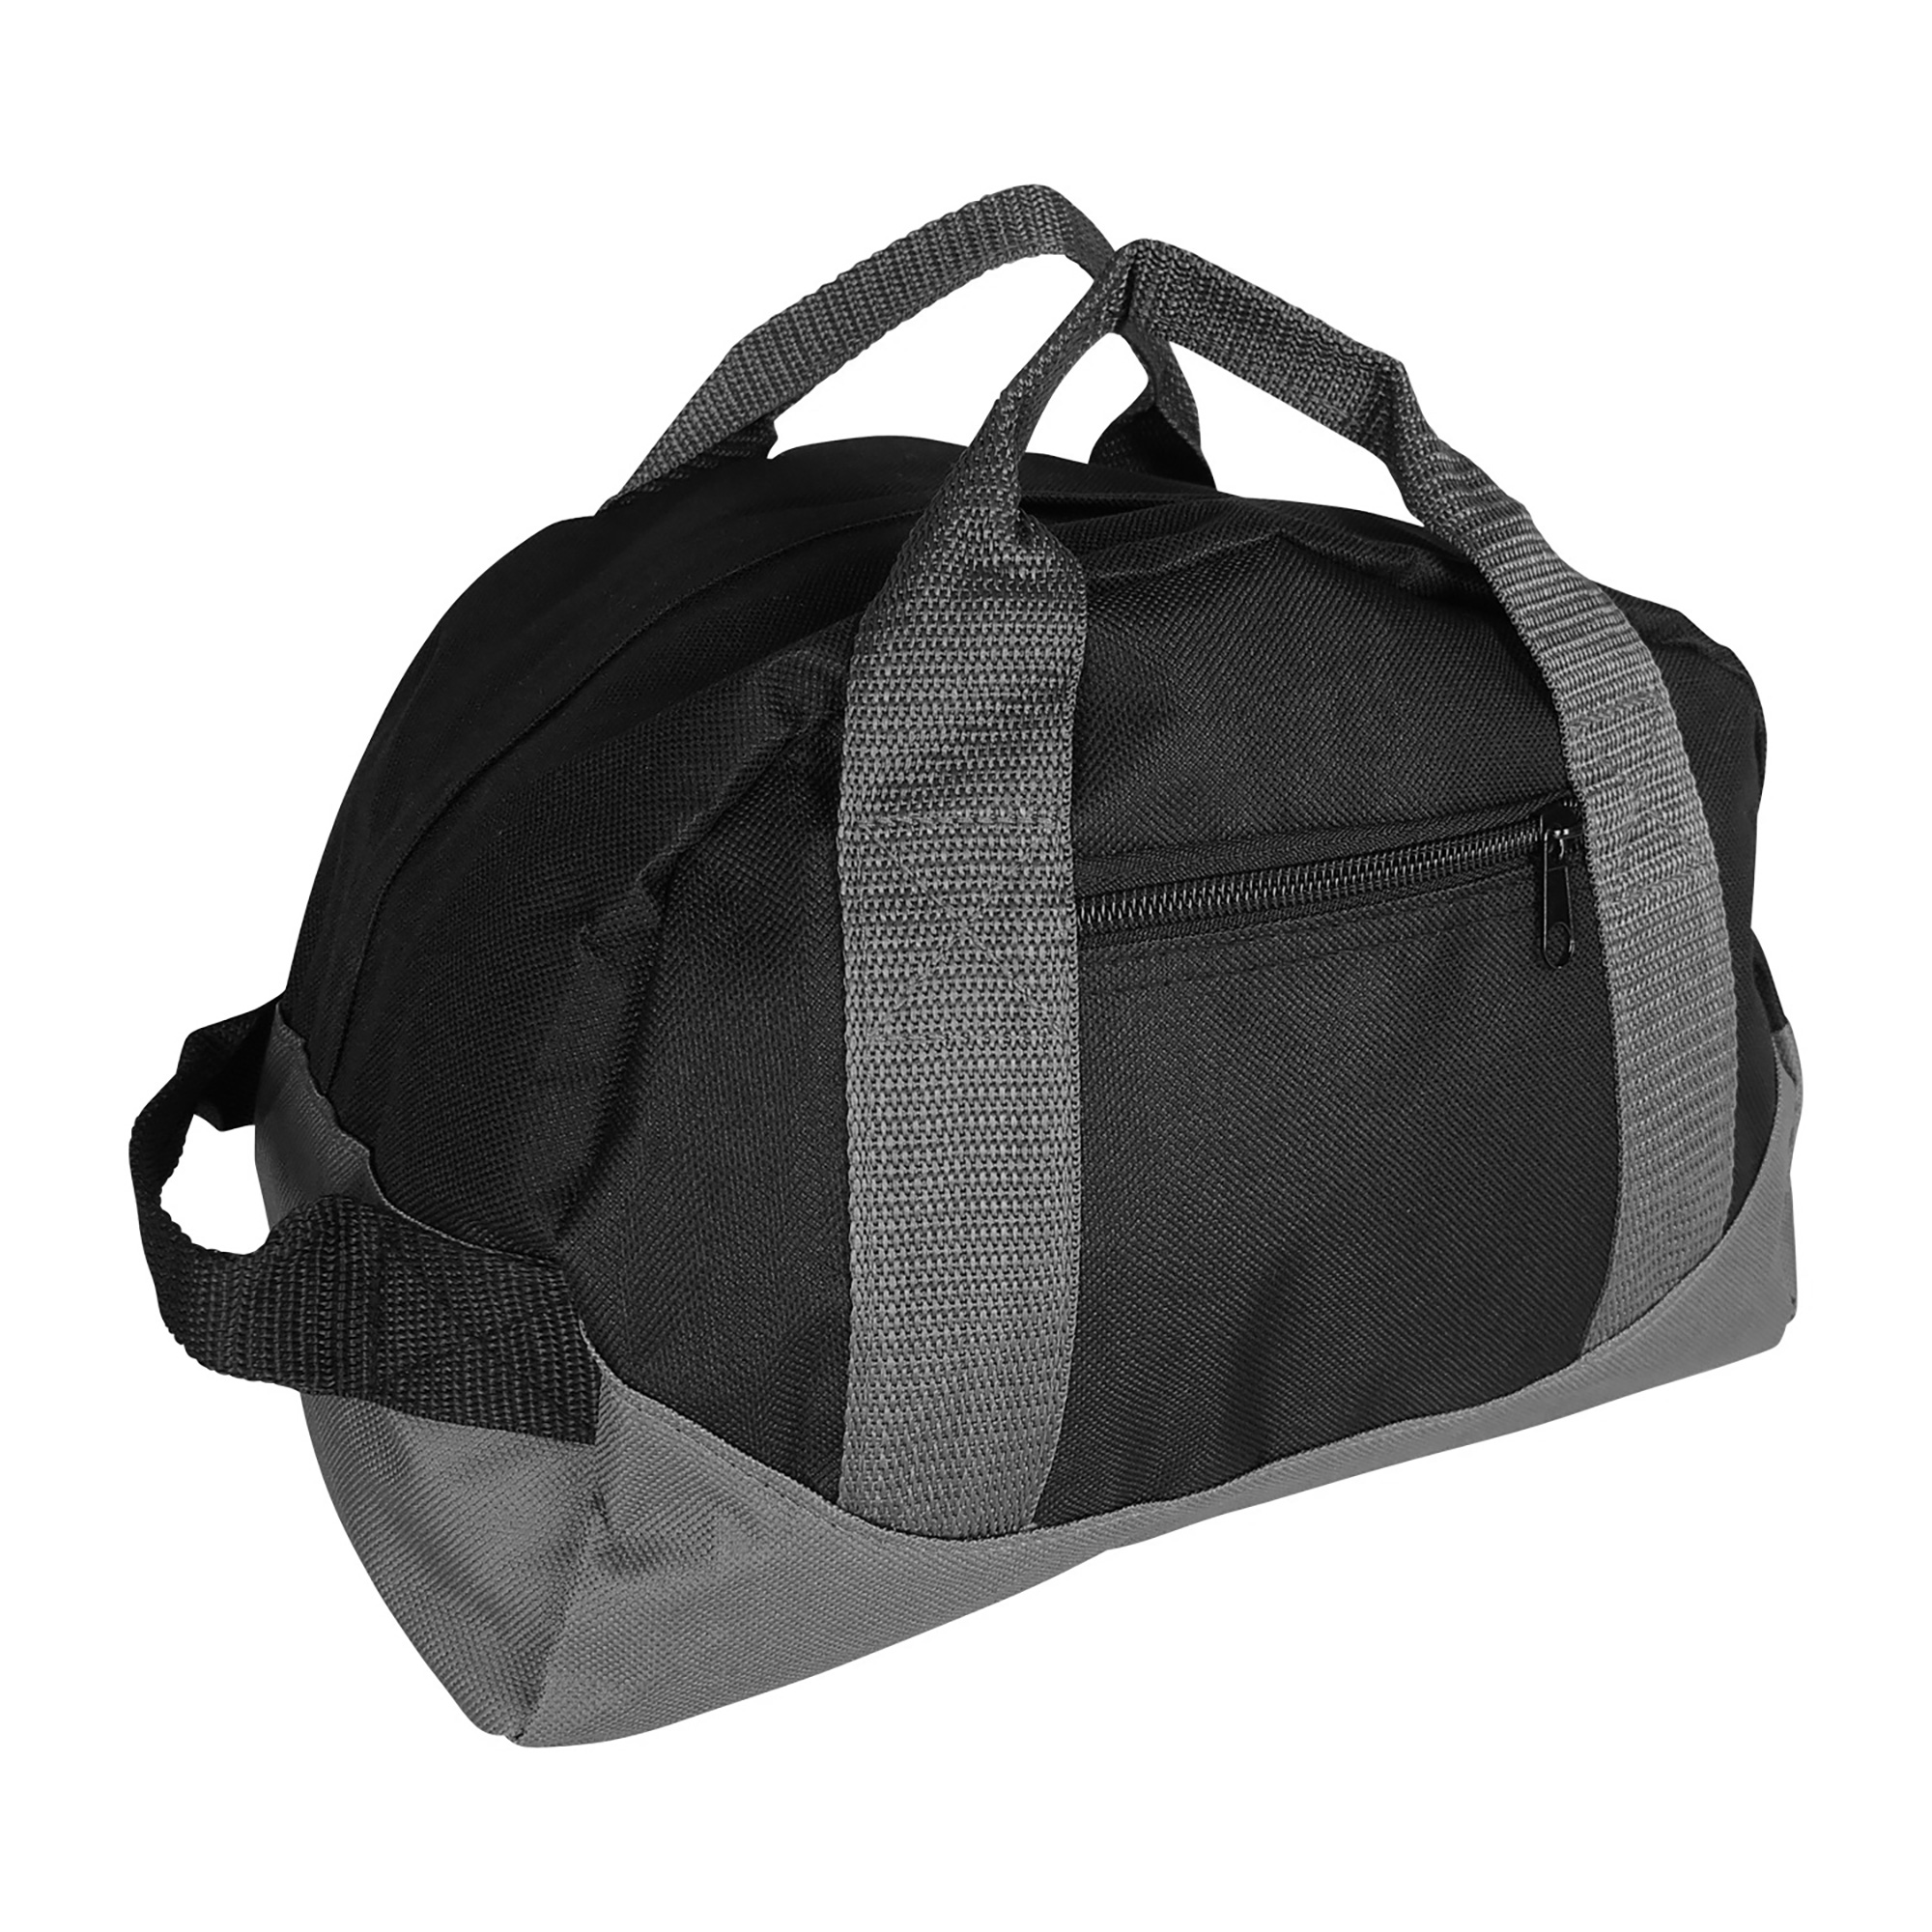 DALIX 12" Mini Duffel Bag Gym Duffle in Black-Gray - image 1 of 3